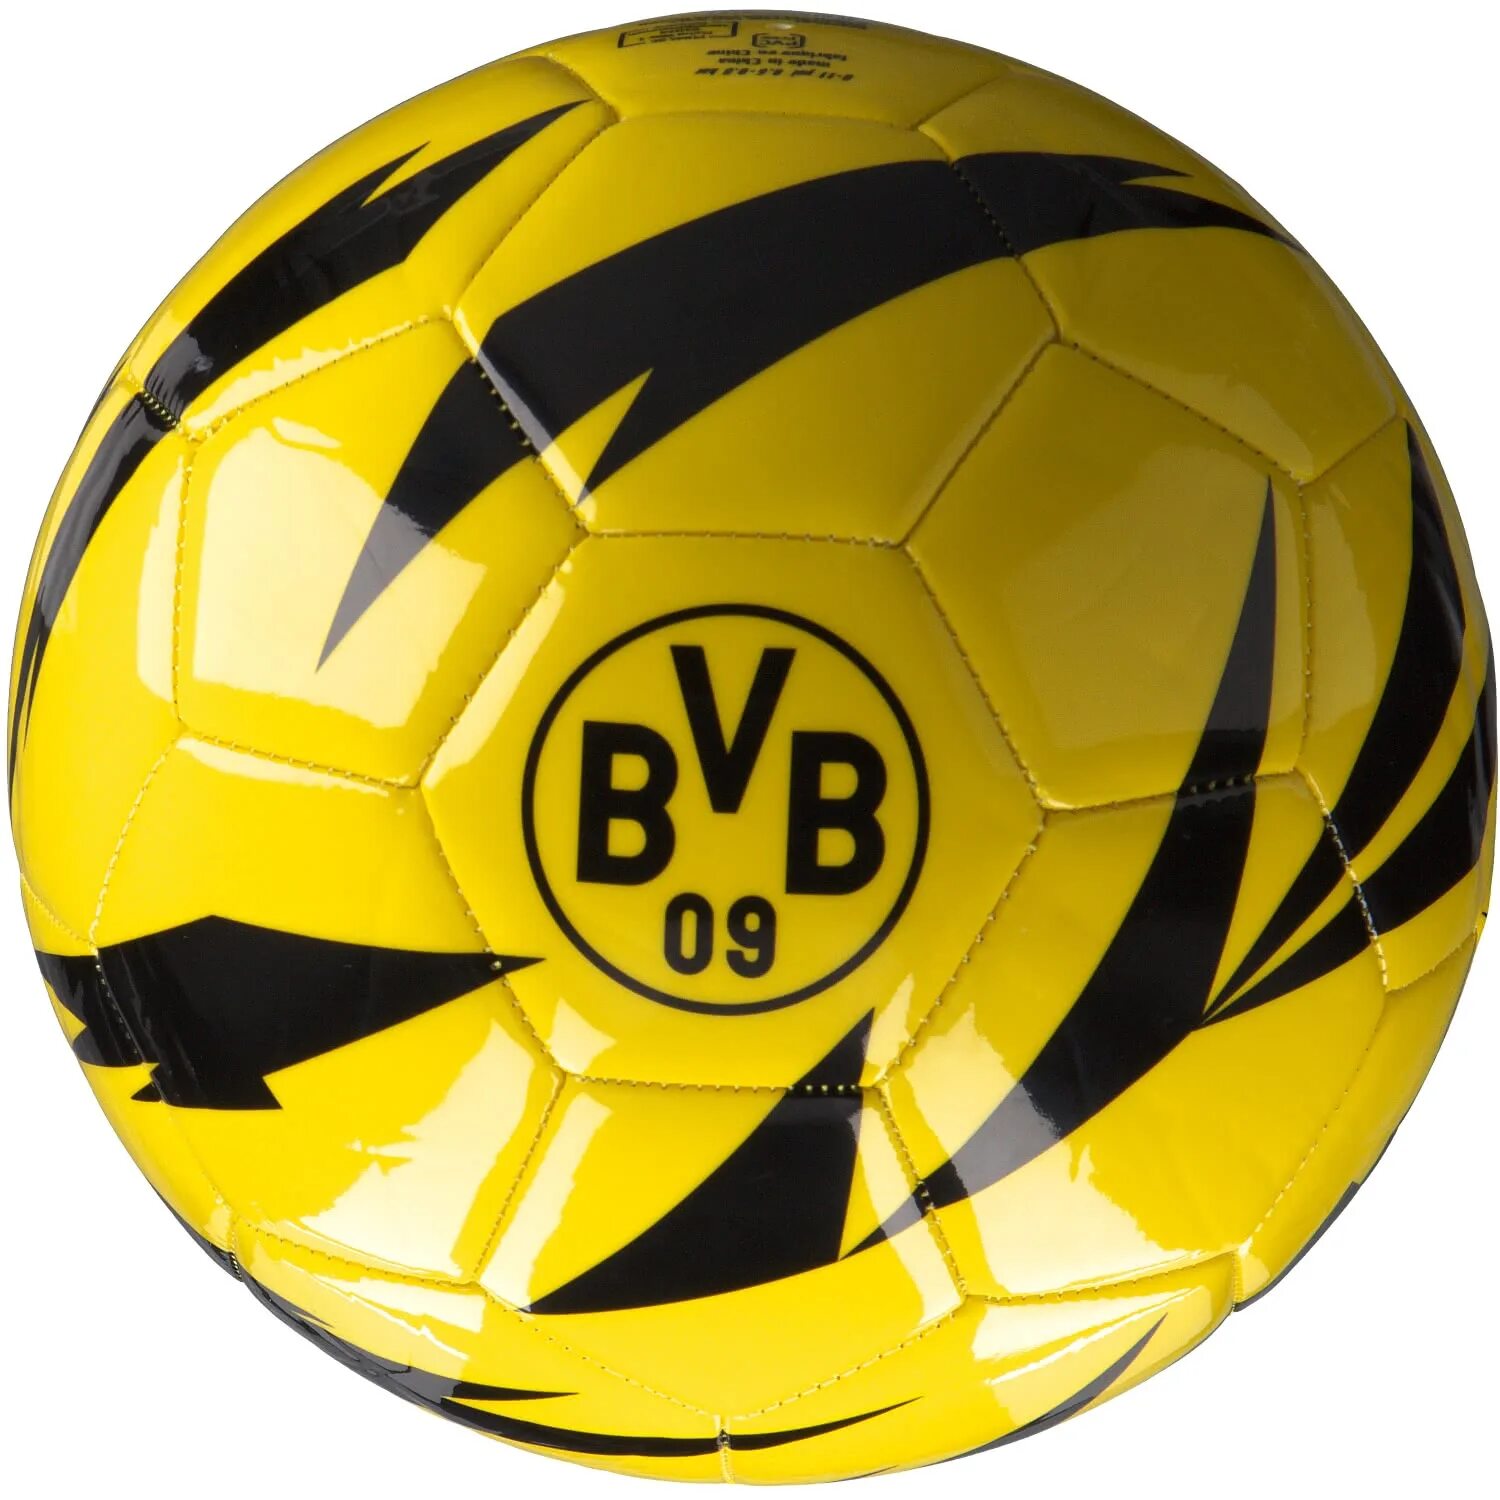 Футбольный мяч Puma Borussia 09 Dortmund. Мяч Боруссии Дортмунд. Puma Borussia мяч. BVB Fan Ball Puma.